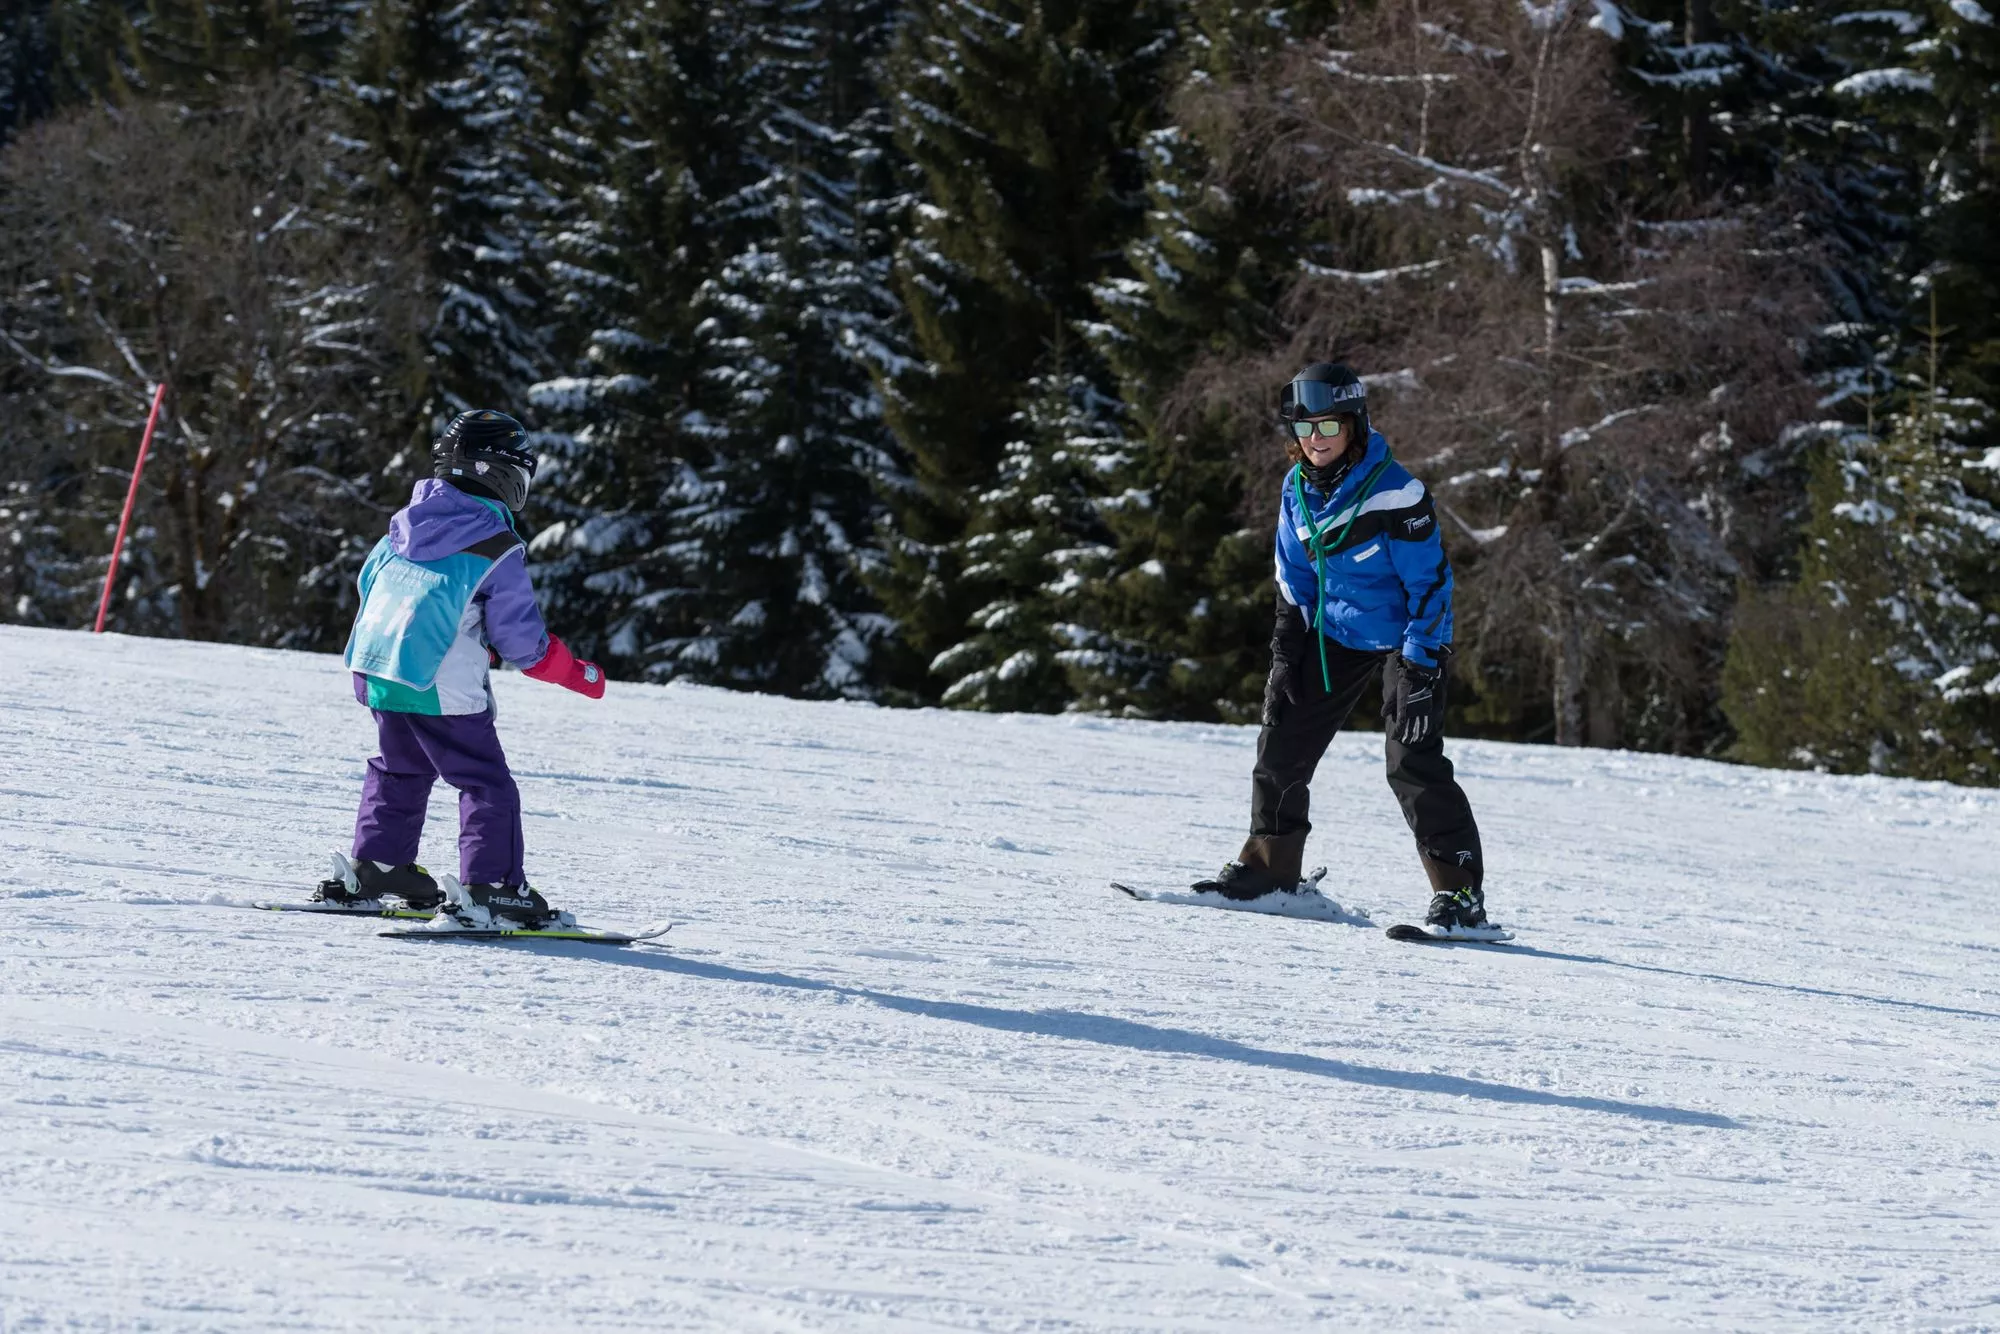 SuperKid School Skijanja in Croatia, Europe | Snowboarding,Skiing - Rated 0.9